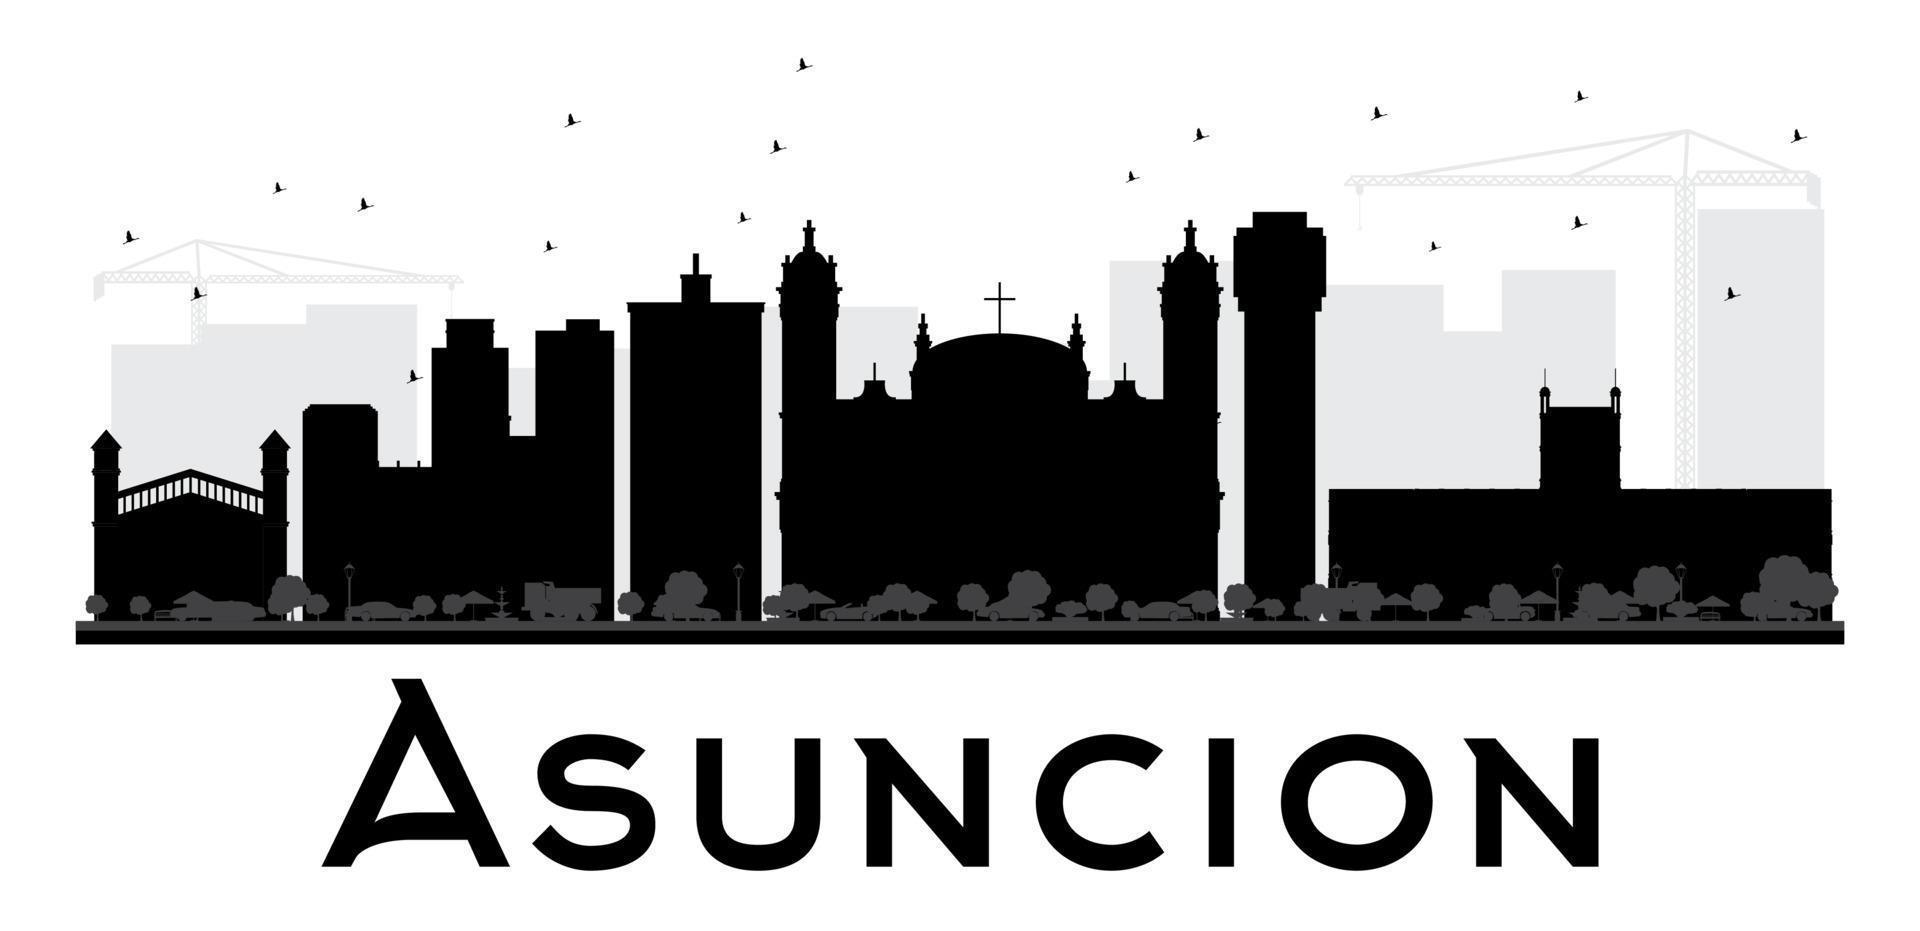 asuncion stad skyline zwart-wit silhouet. vector